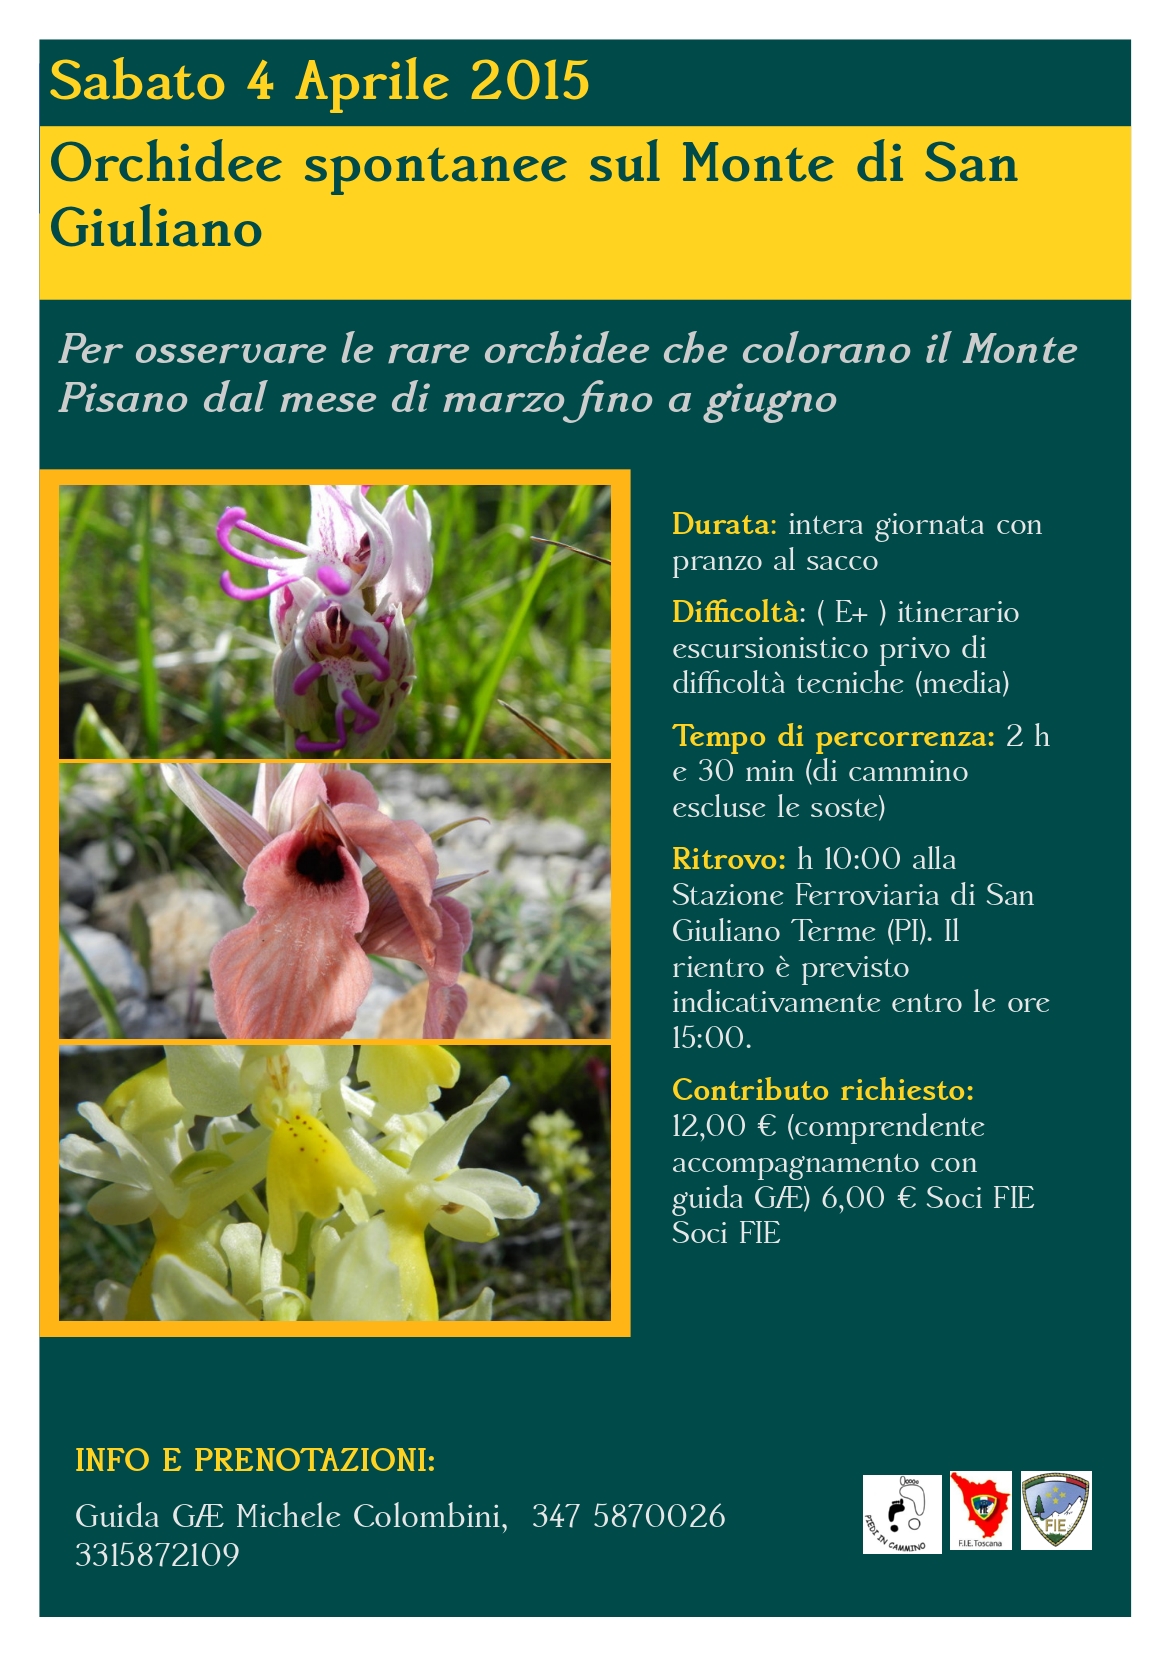 orchidee spontaneee Piedi in Cammino FIE Pisa Monte Pisano